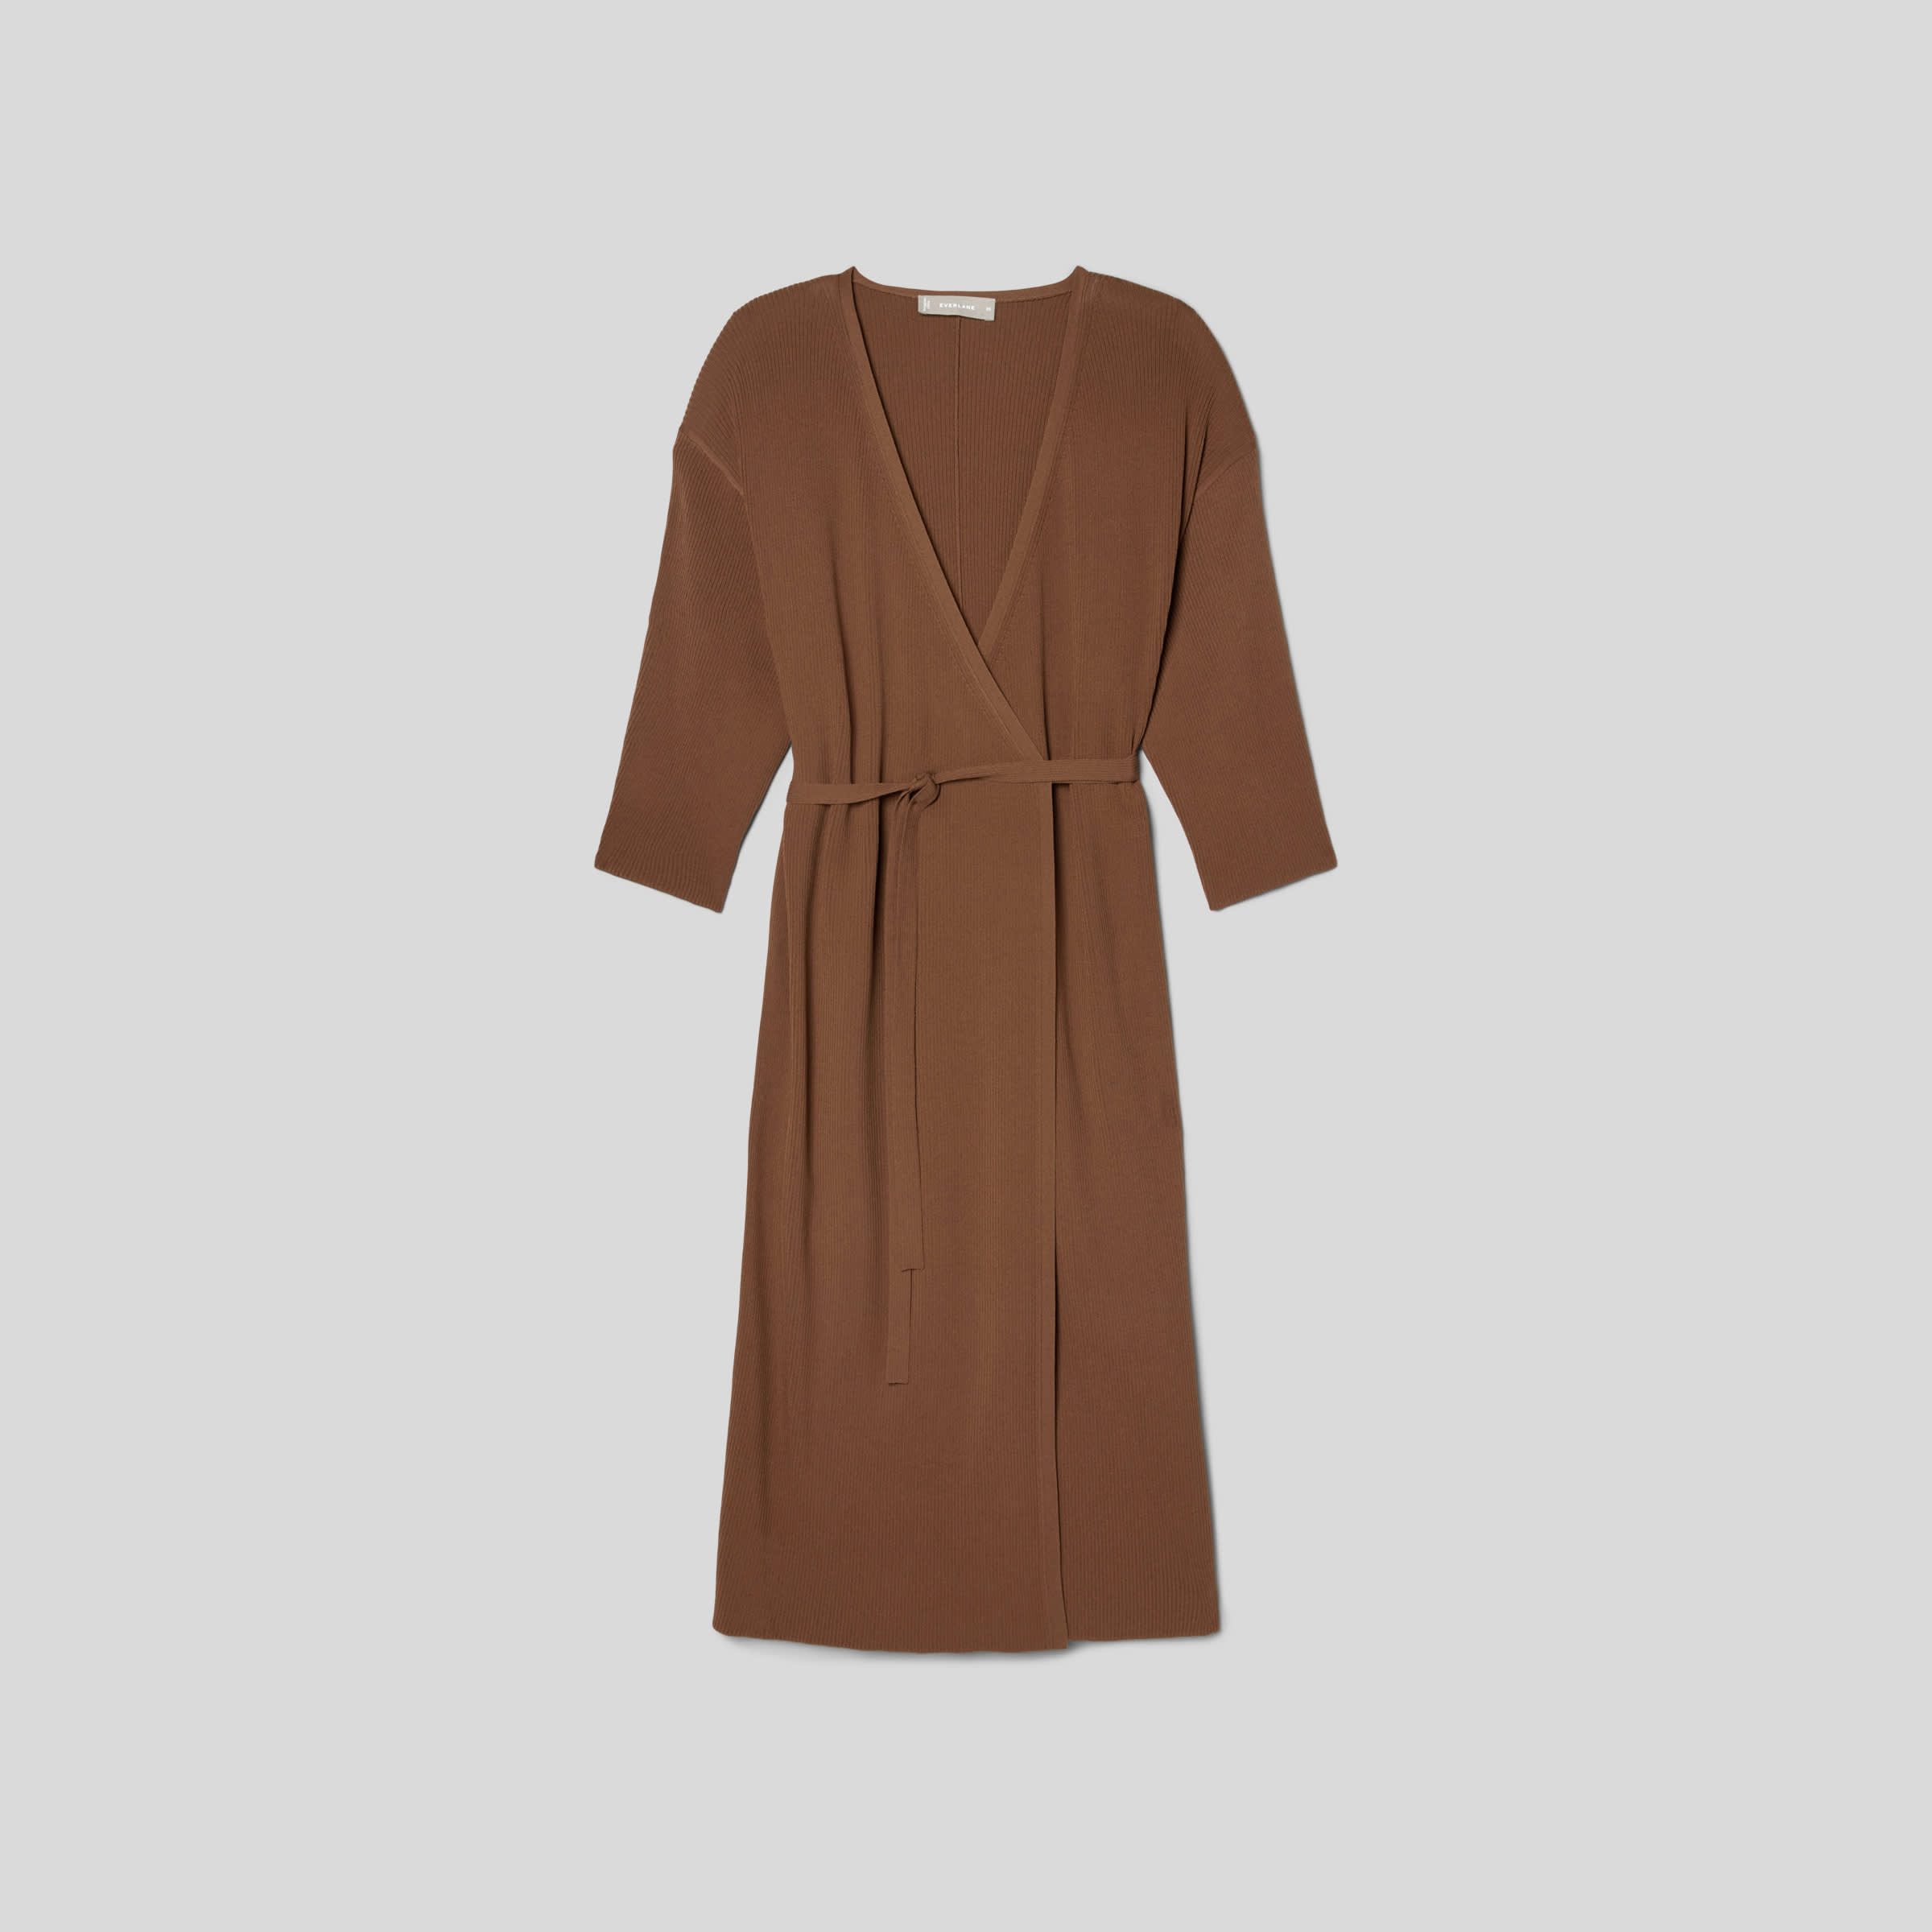 Everlane Long-Sleeve Mini Wrap Dress Review